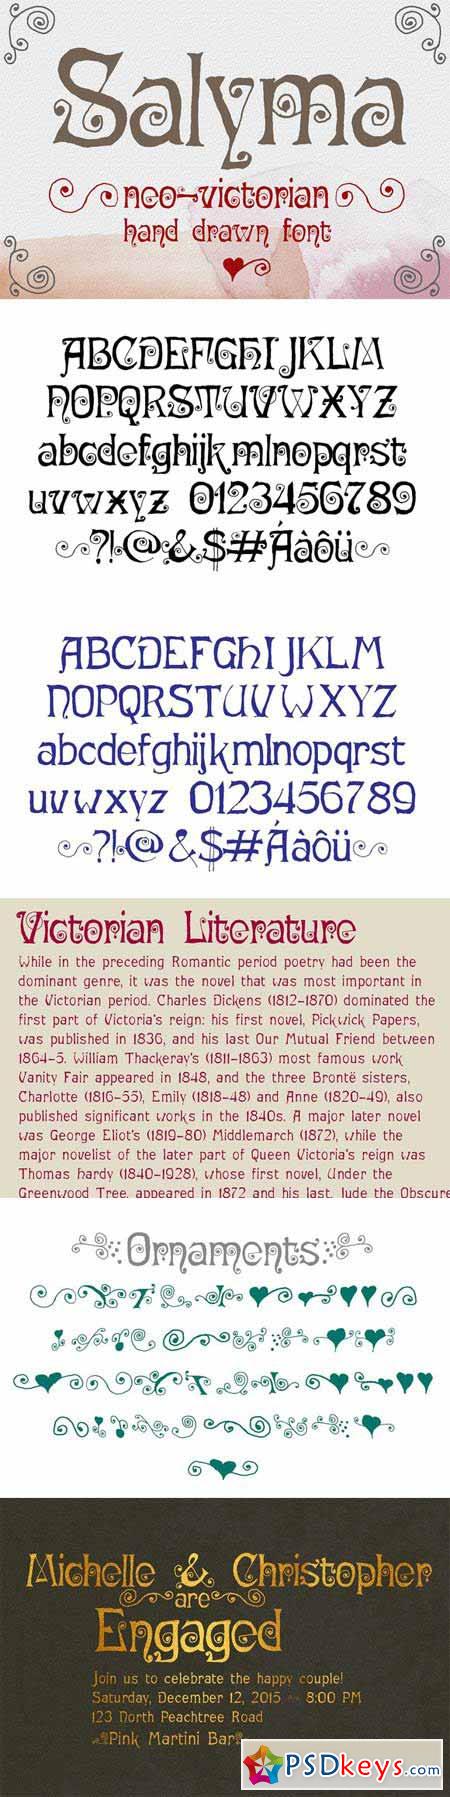 Salyma neo-victorian hand drawn font 436447